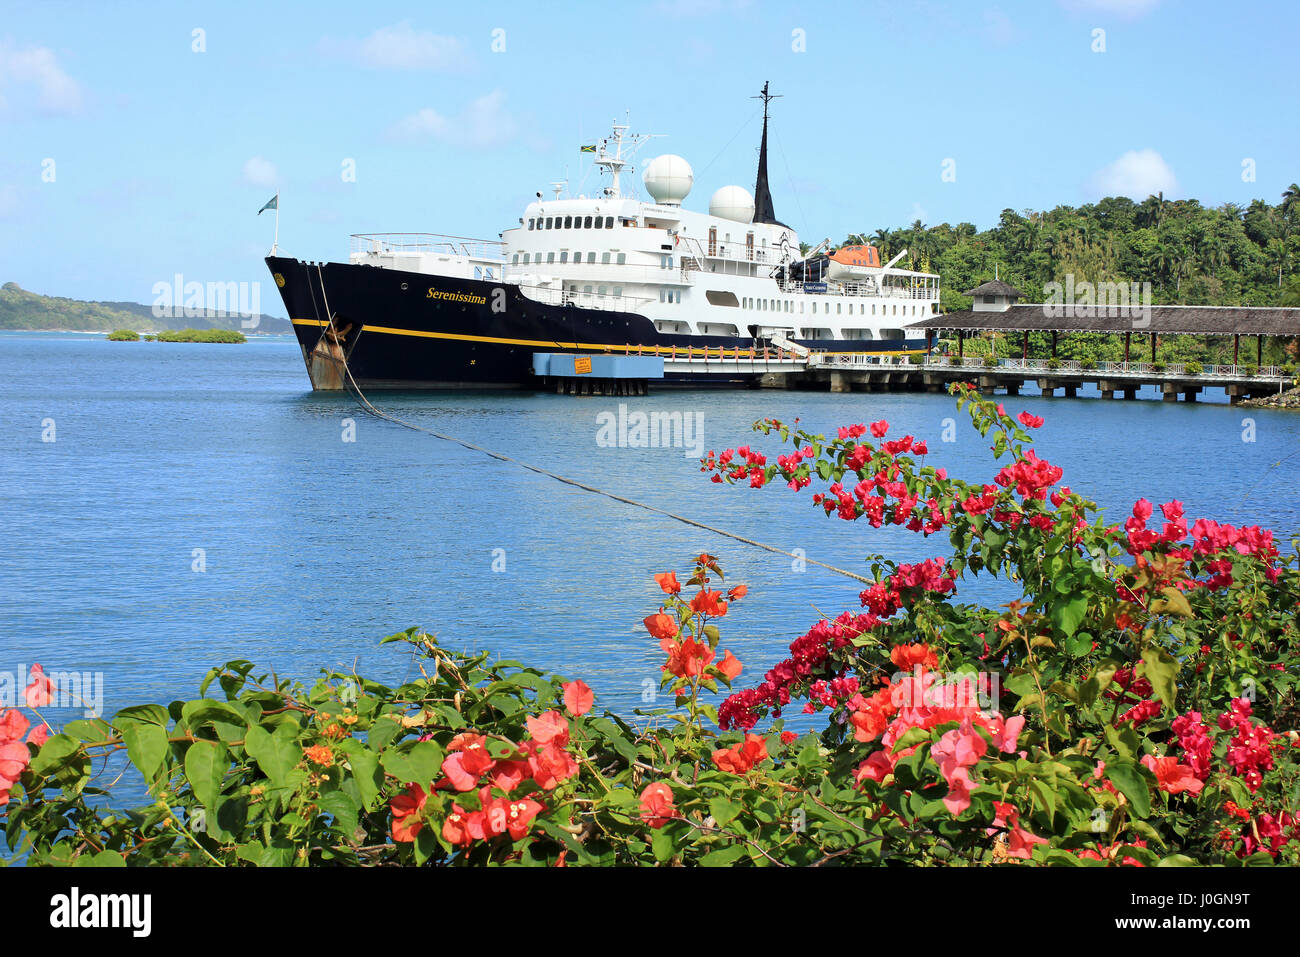 MS Serenissima docked at Port Antonio, Jamaica Stock Photo